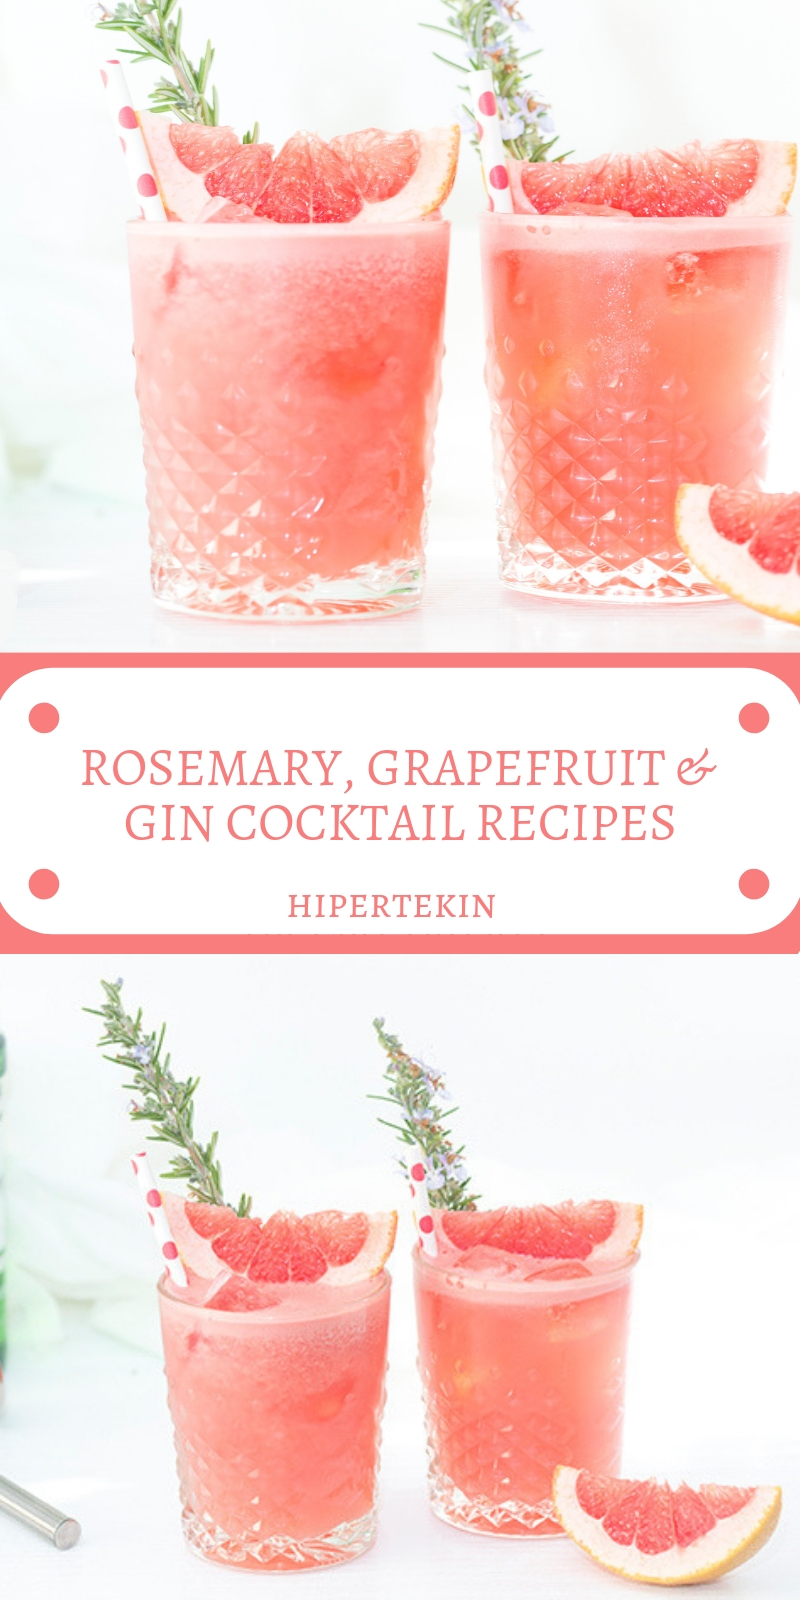 ROSEMARY, GRAPEFRUIT & GIN COCKTAIL RECIPES